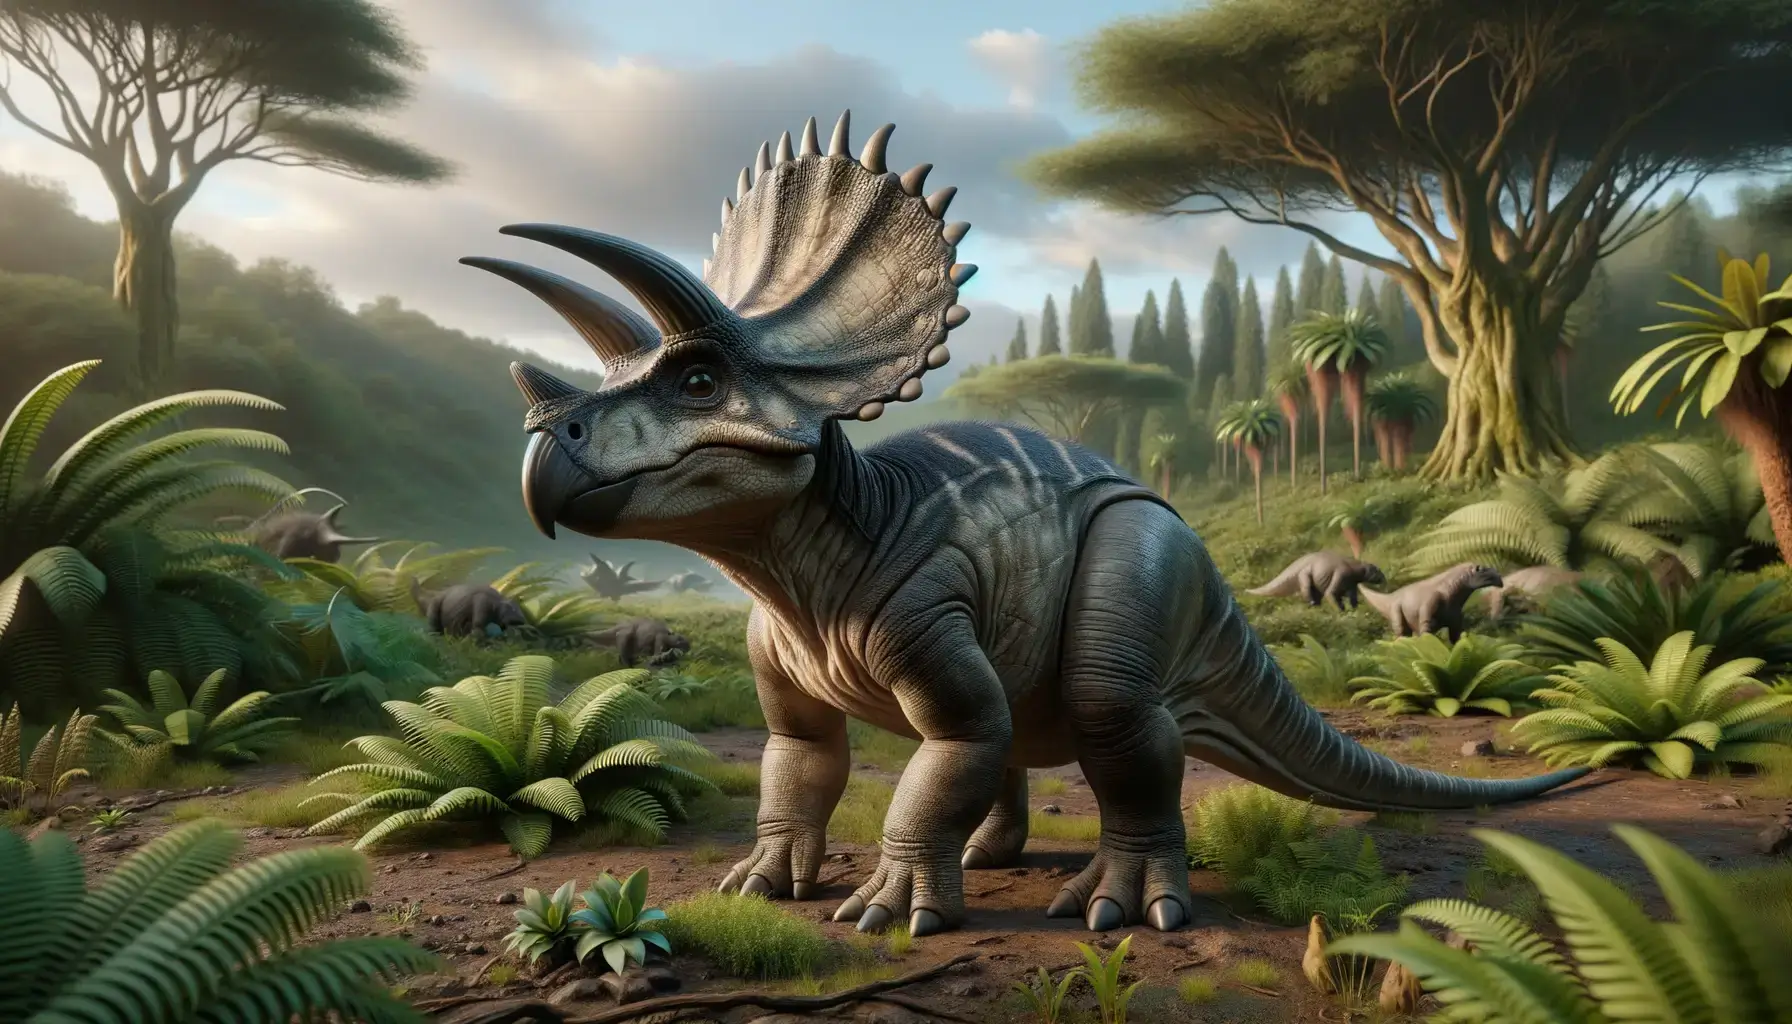 Realistic 3D render of Avaceratops in Cretaceous habitat.